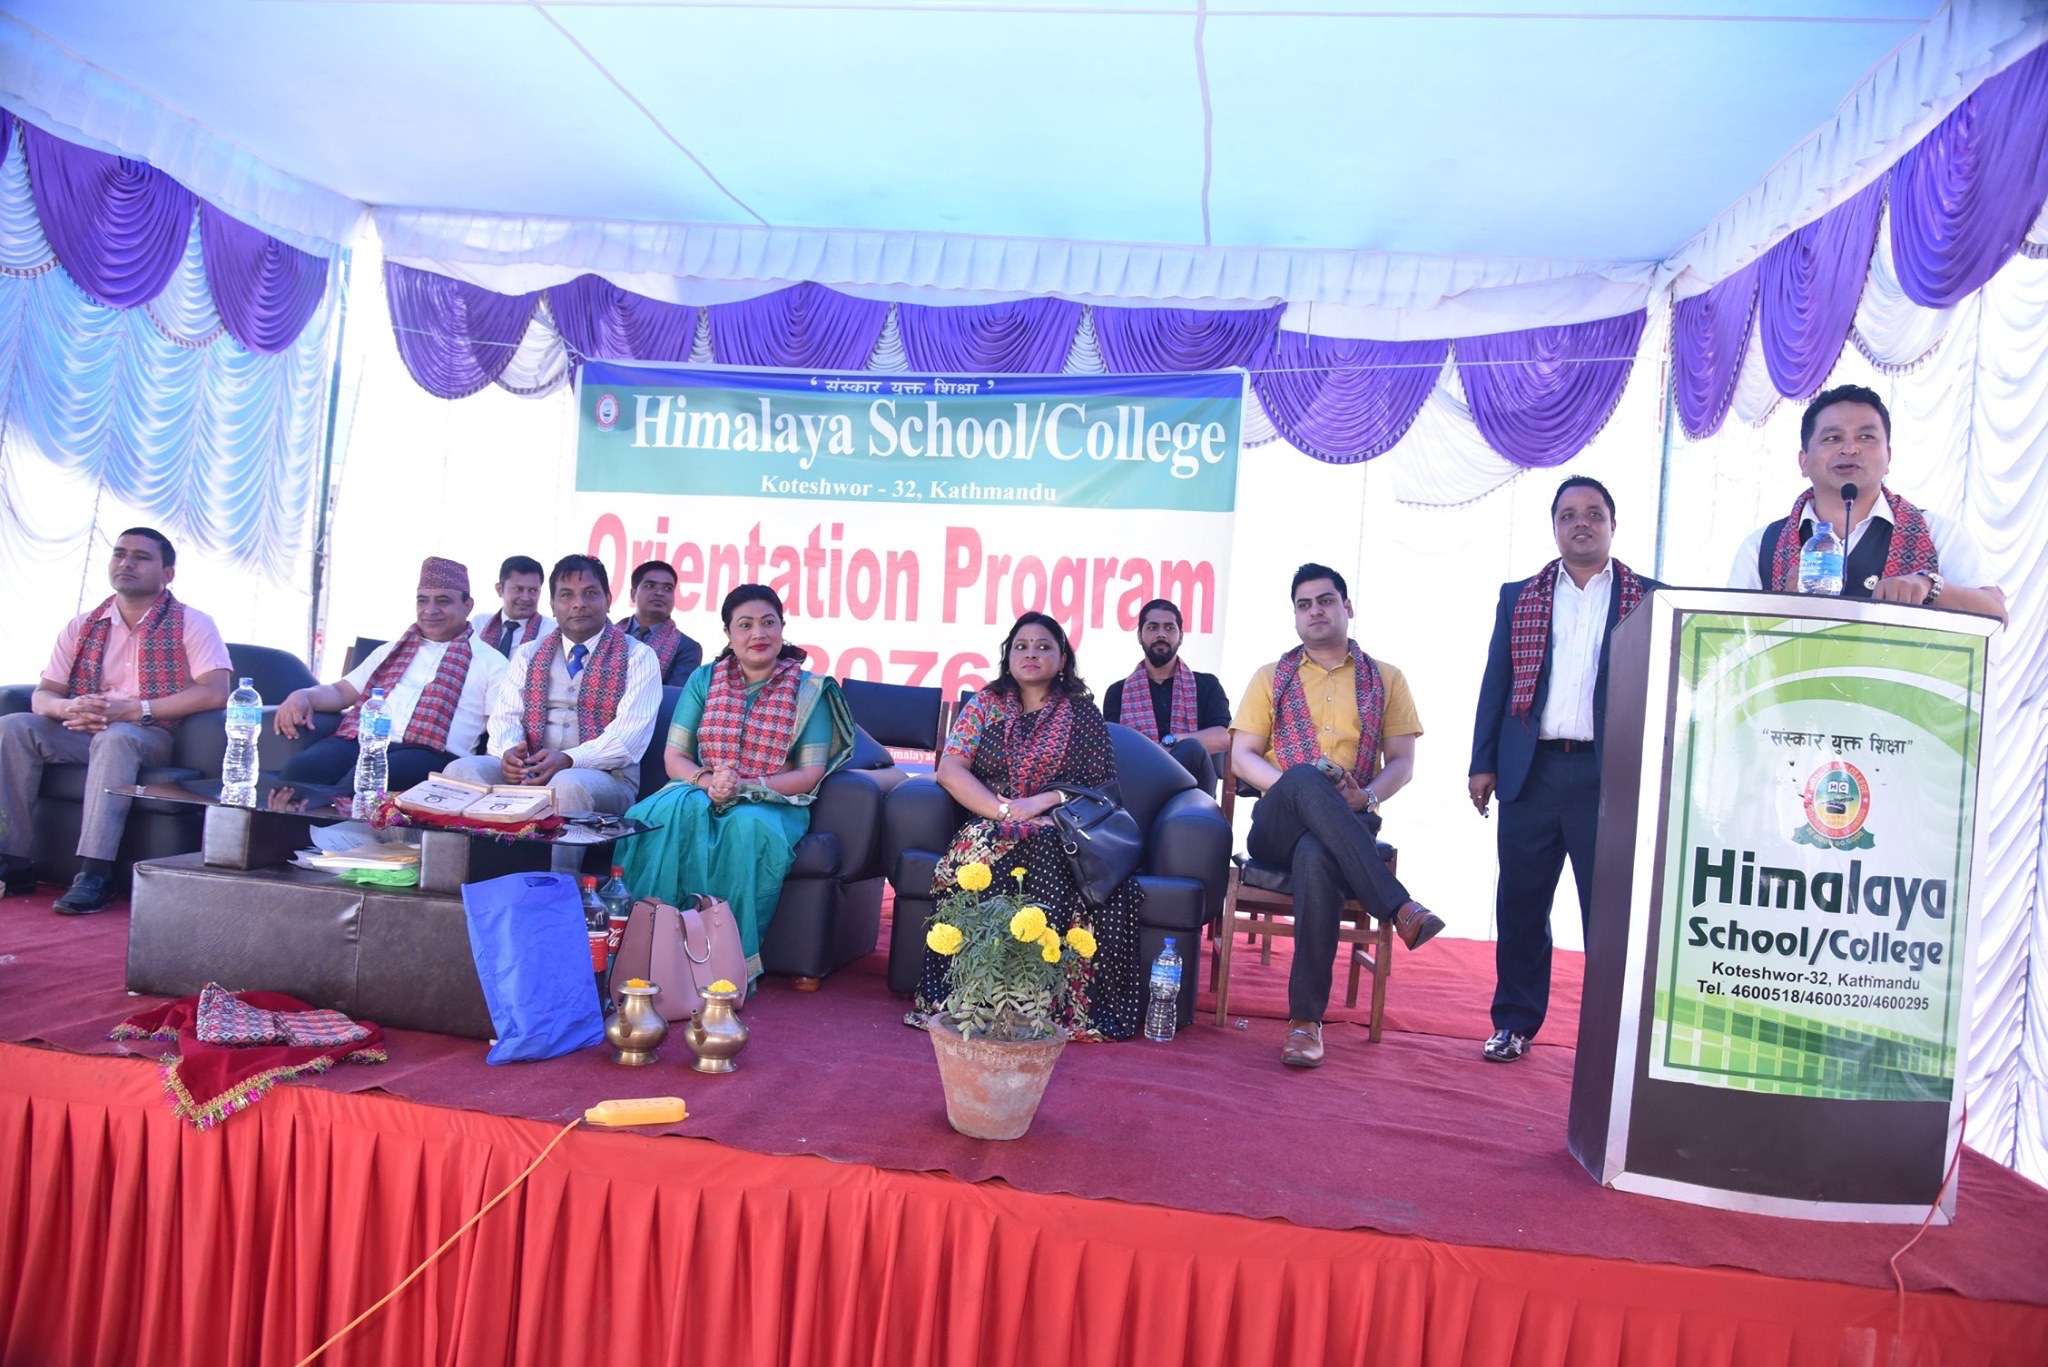 Himalaya School / College